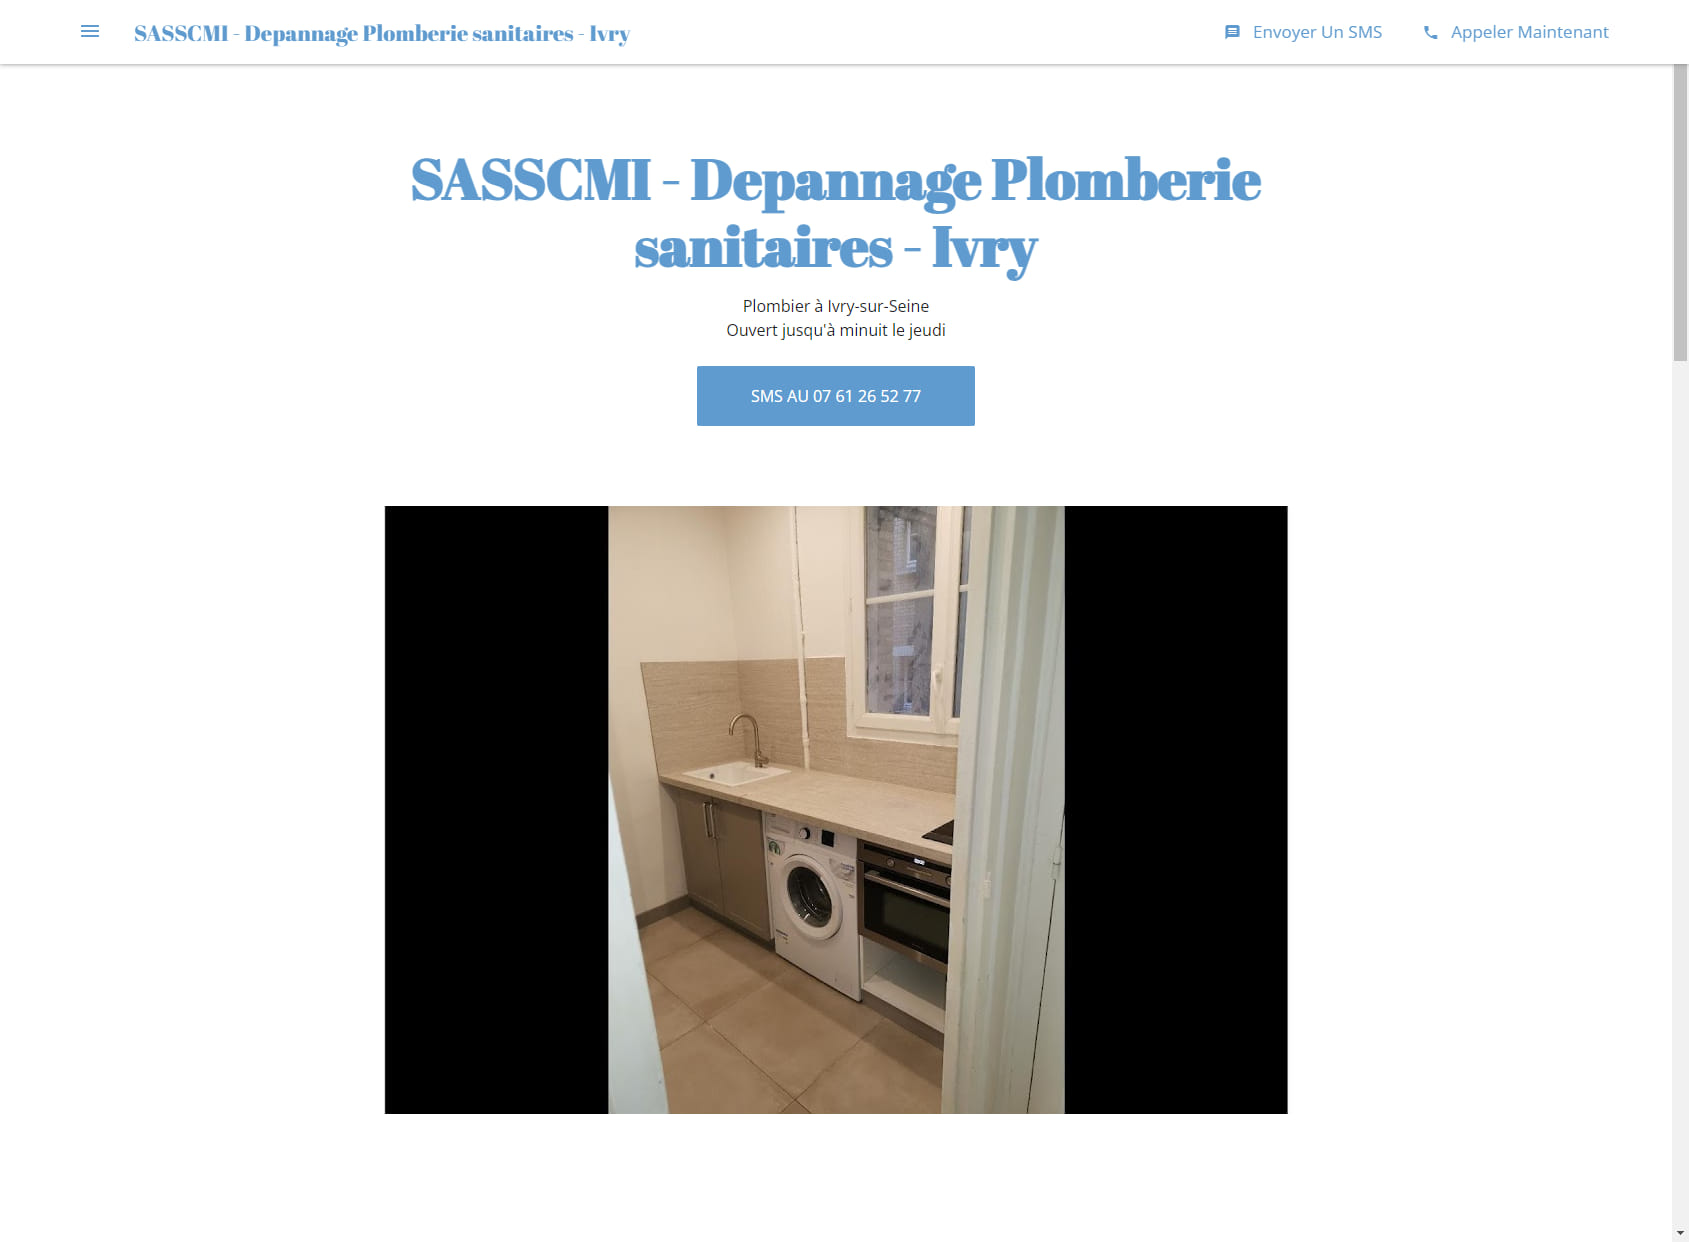 SASSCMI - Plomberie sanitaires